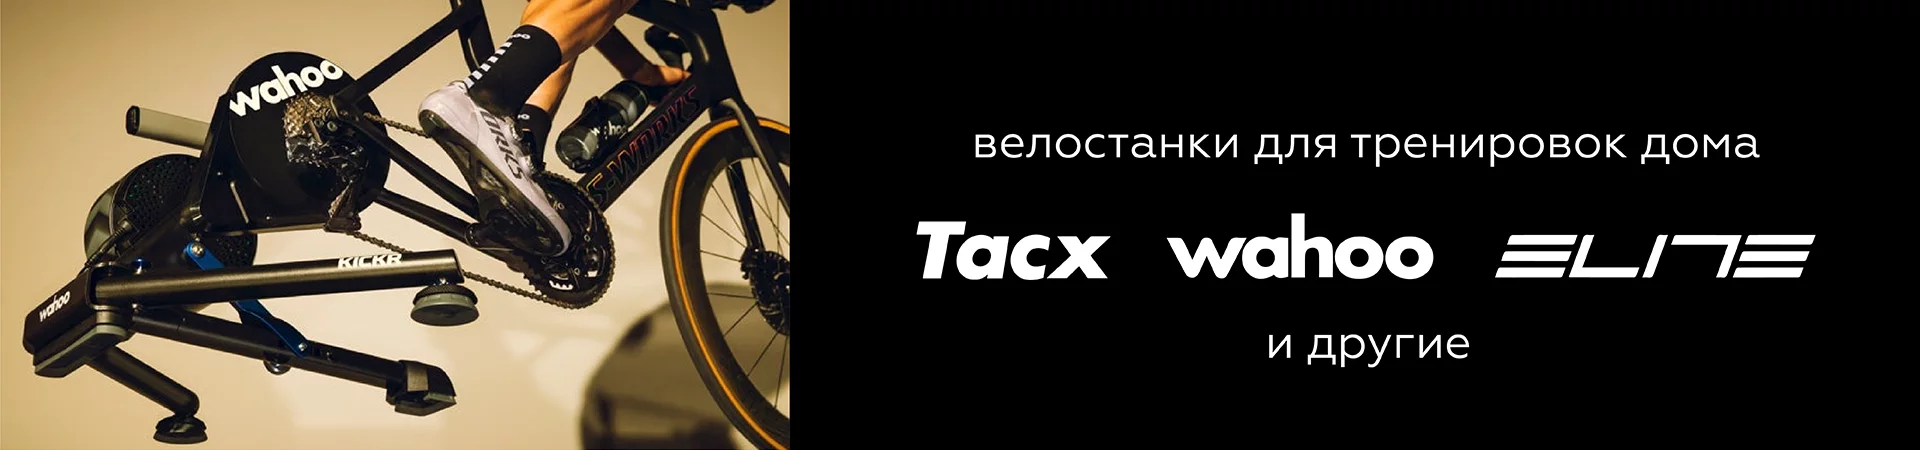 Велостанки Tacx Wahoo Elite